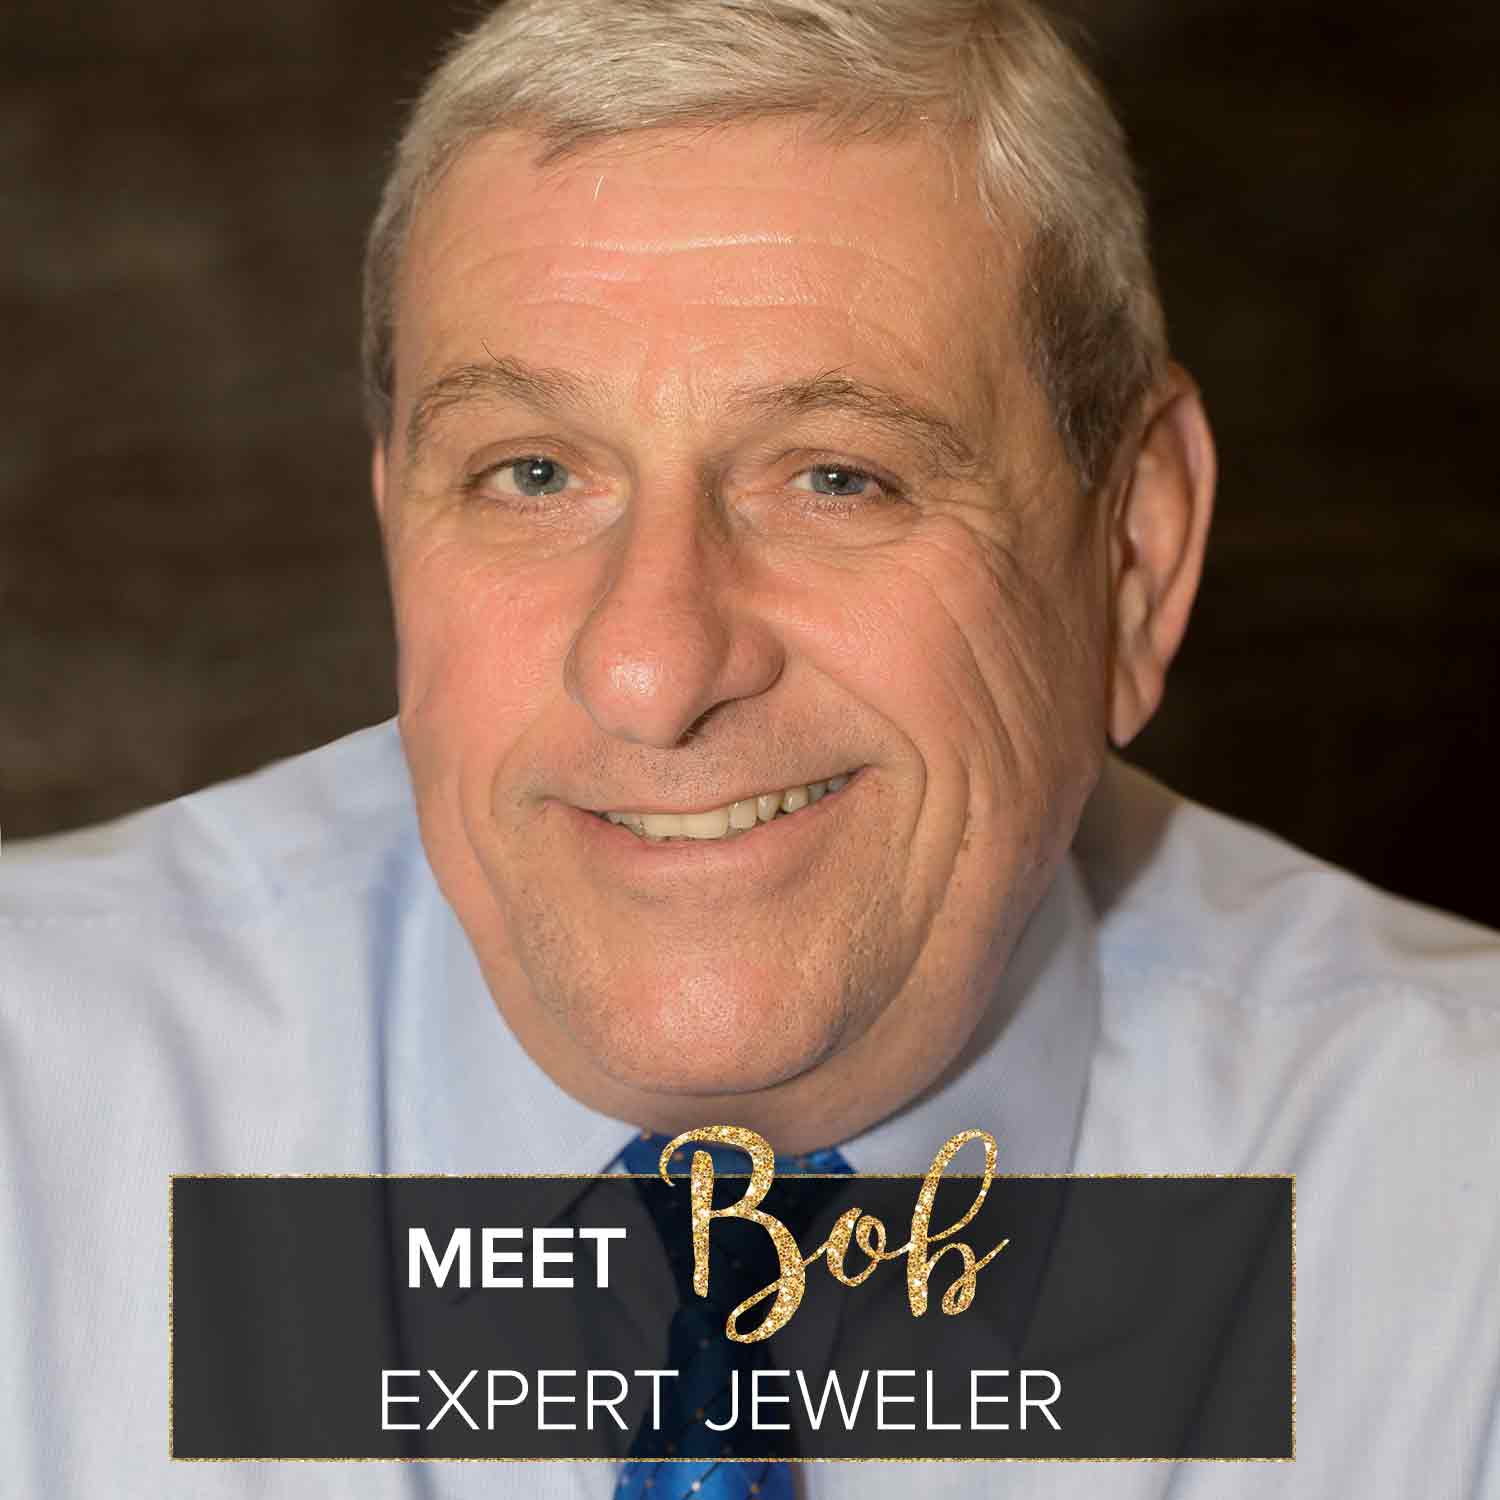 Jeweler Bob at Steven Singer Jewelers